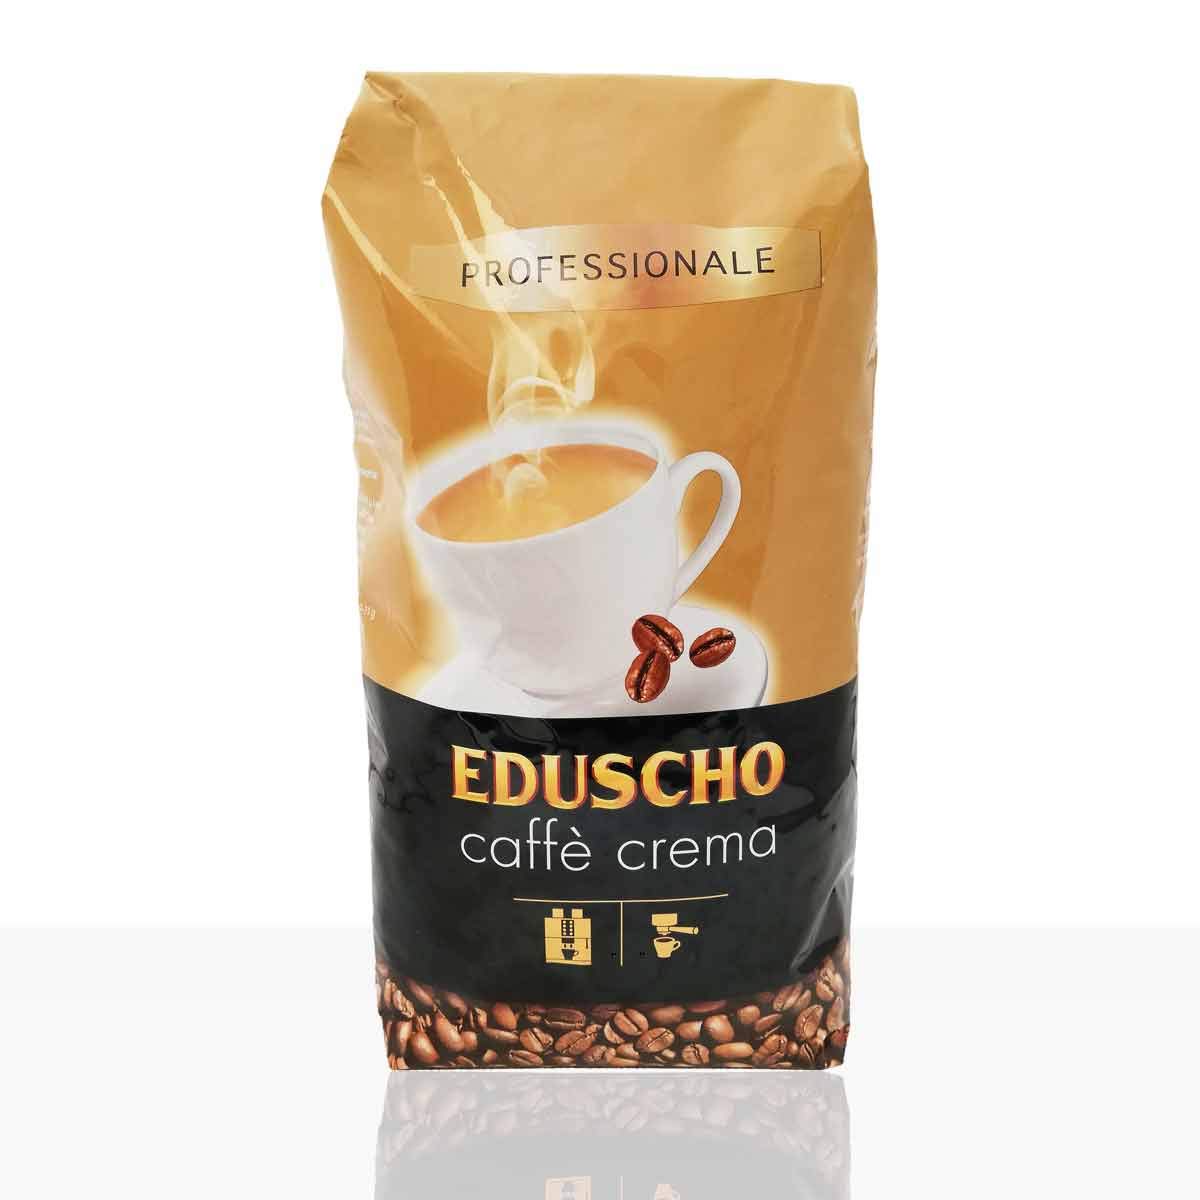 Bezug Eduscho Caffè Crema Professionale, Whole bean - 1kg - 6x